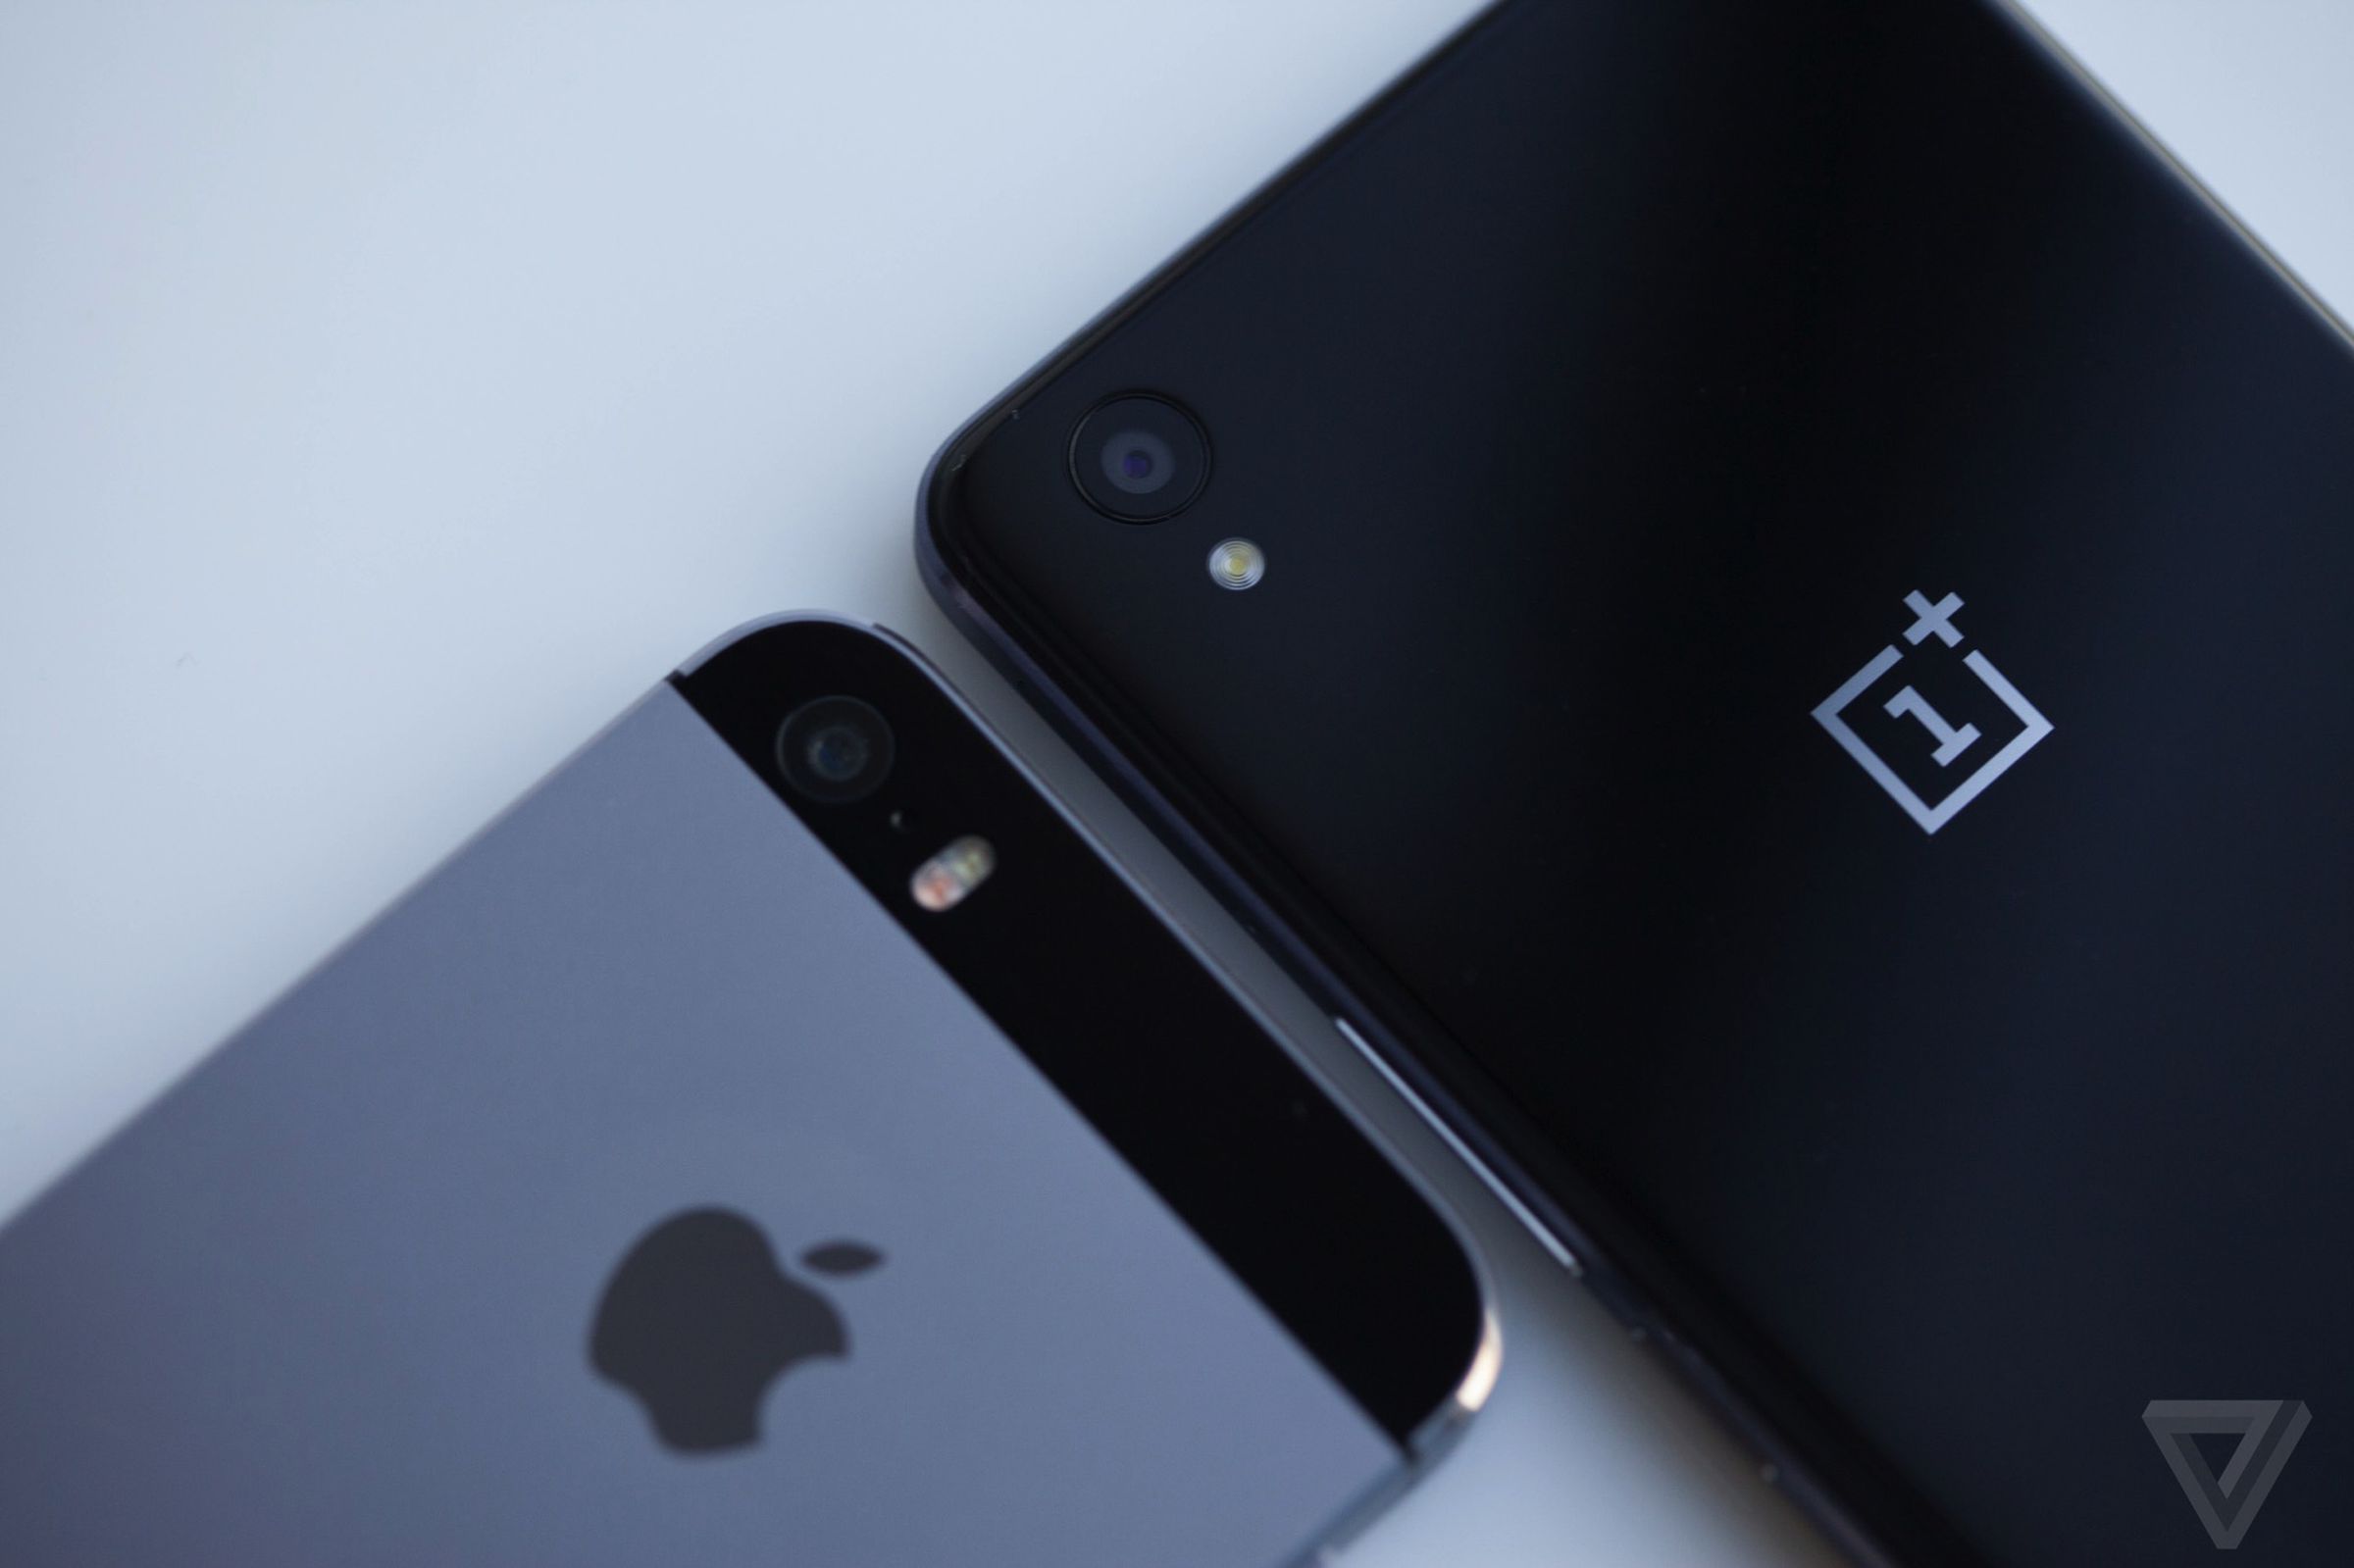 OnePlus X, meet iPhone 5S